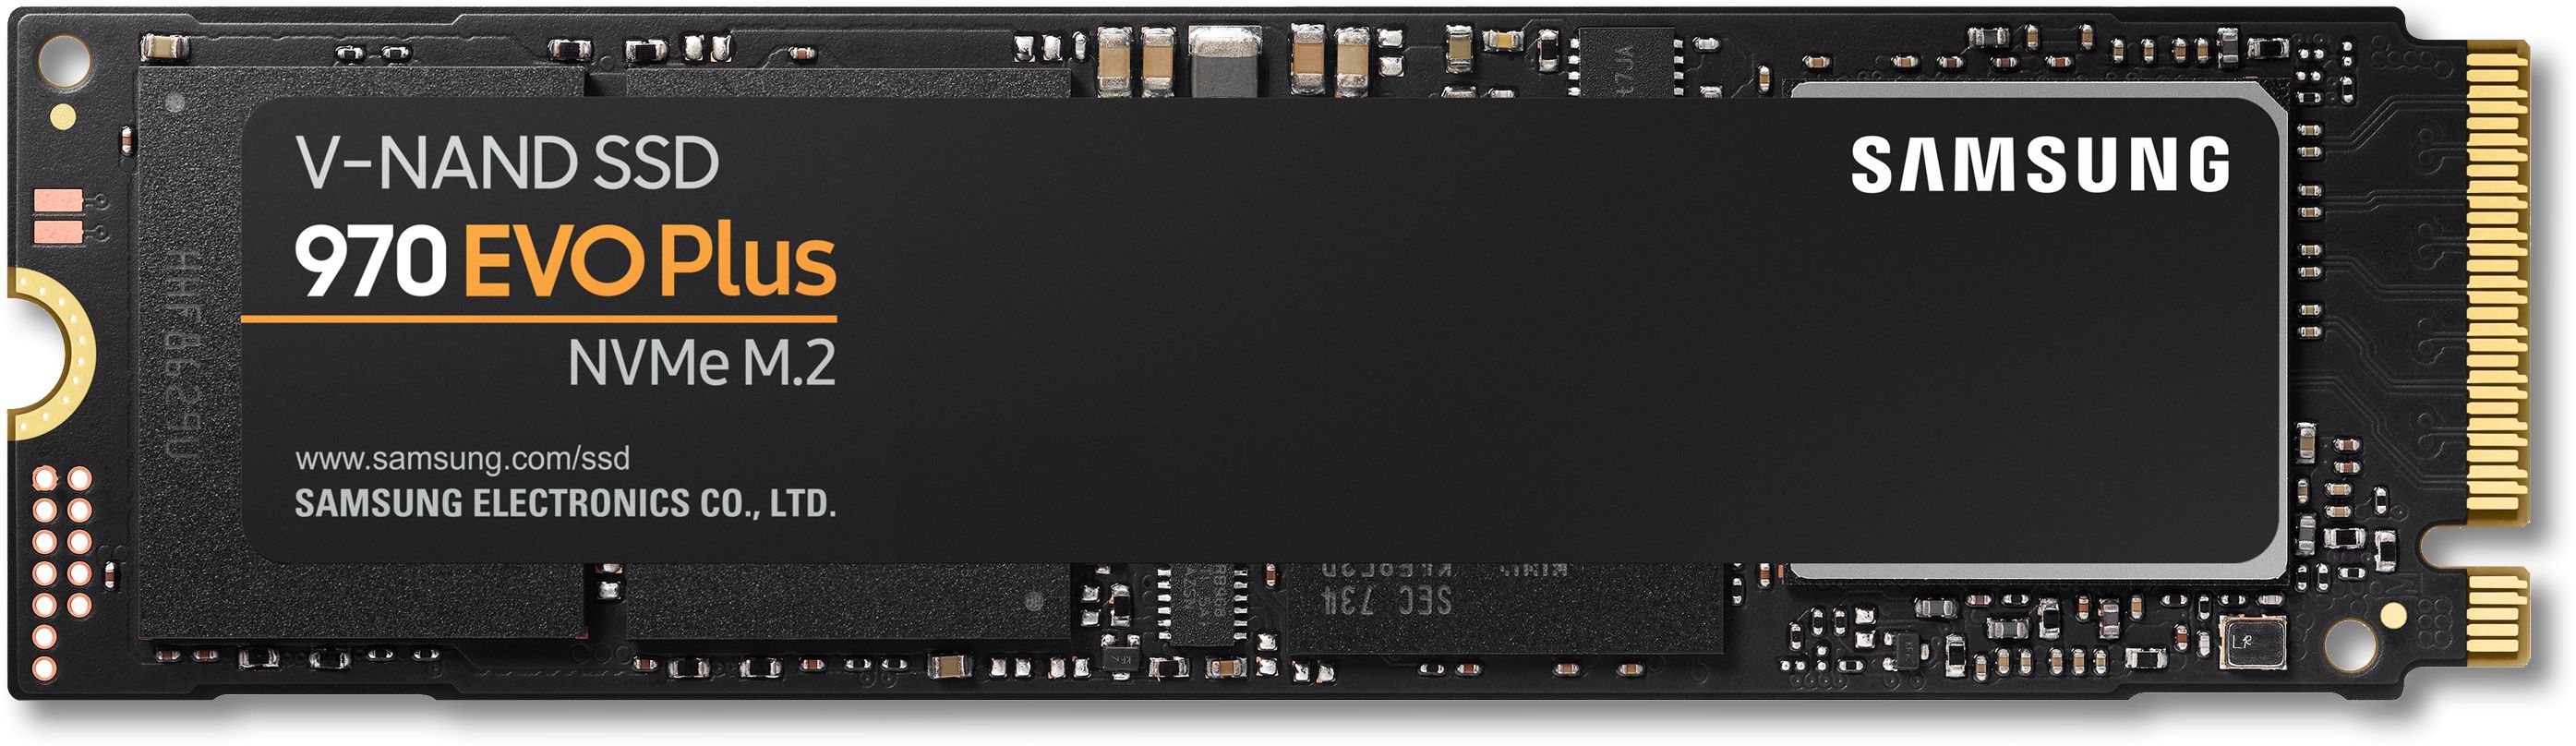 Samsung 970 EVO Plus NVMe M.2 State Drives